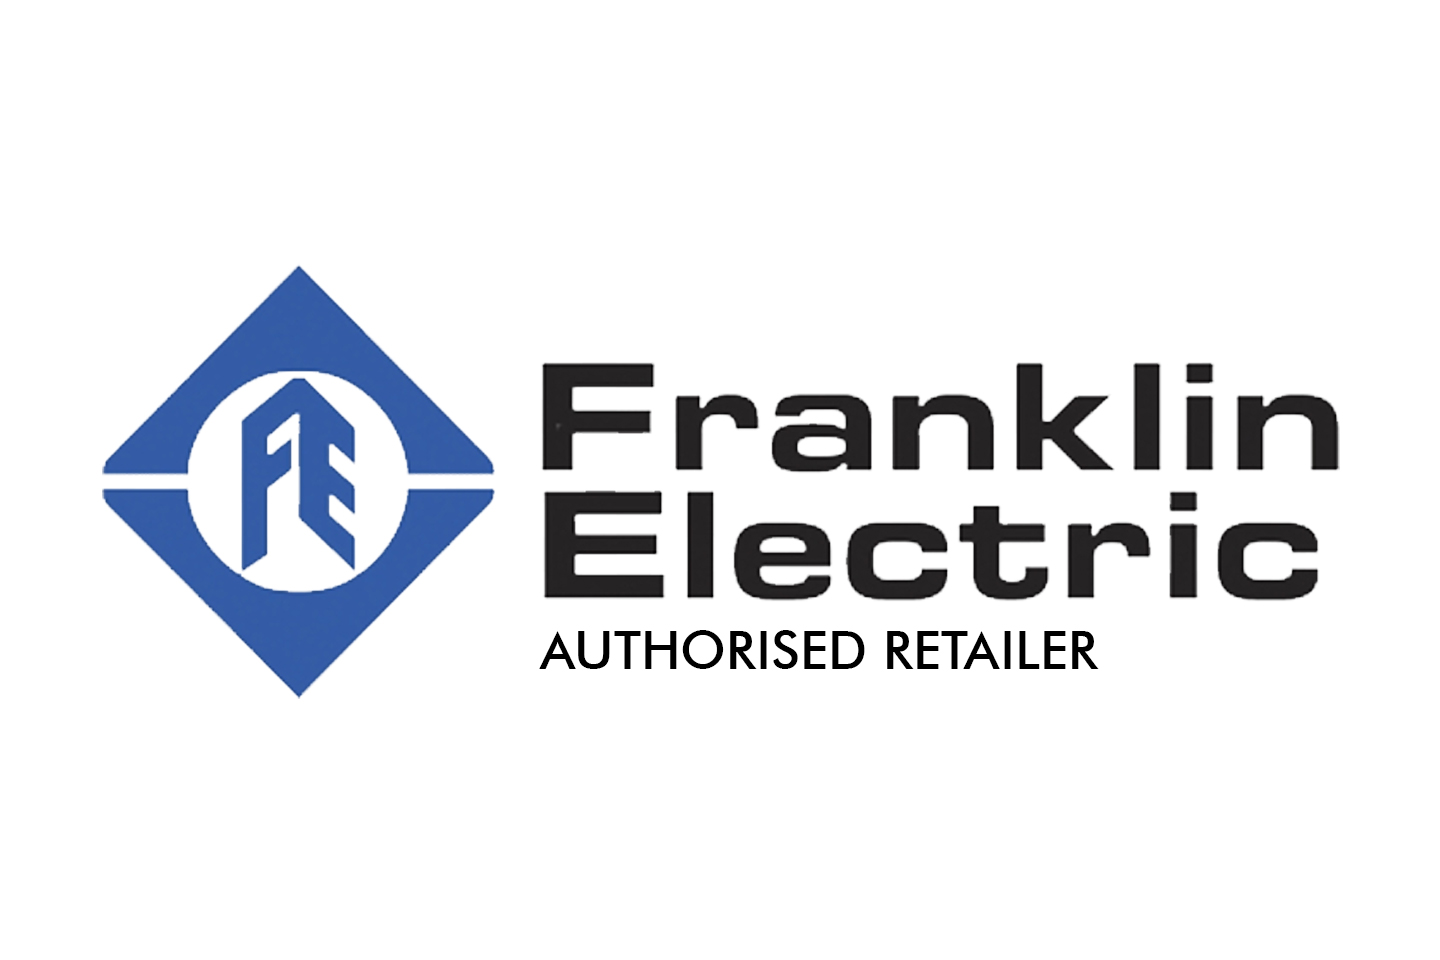 Franklin Electric Authorised Retailer